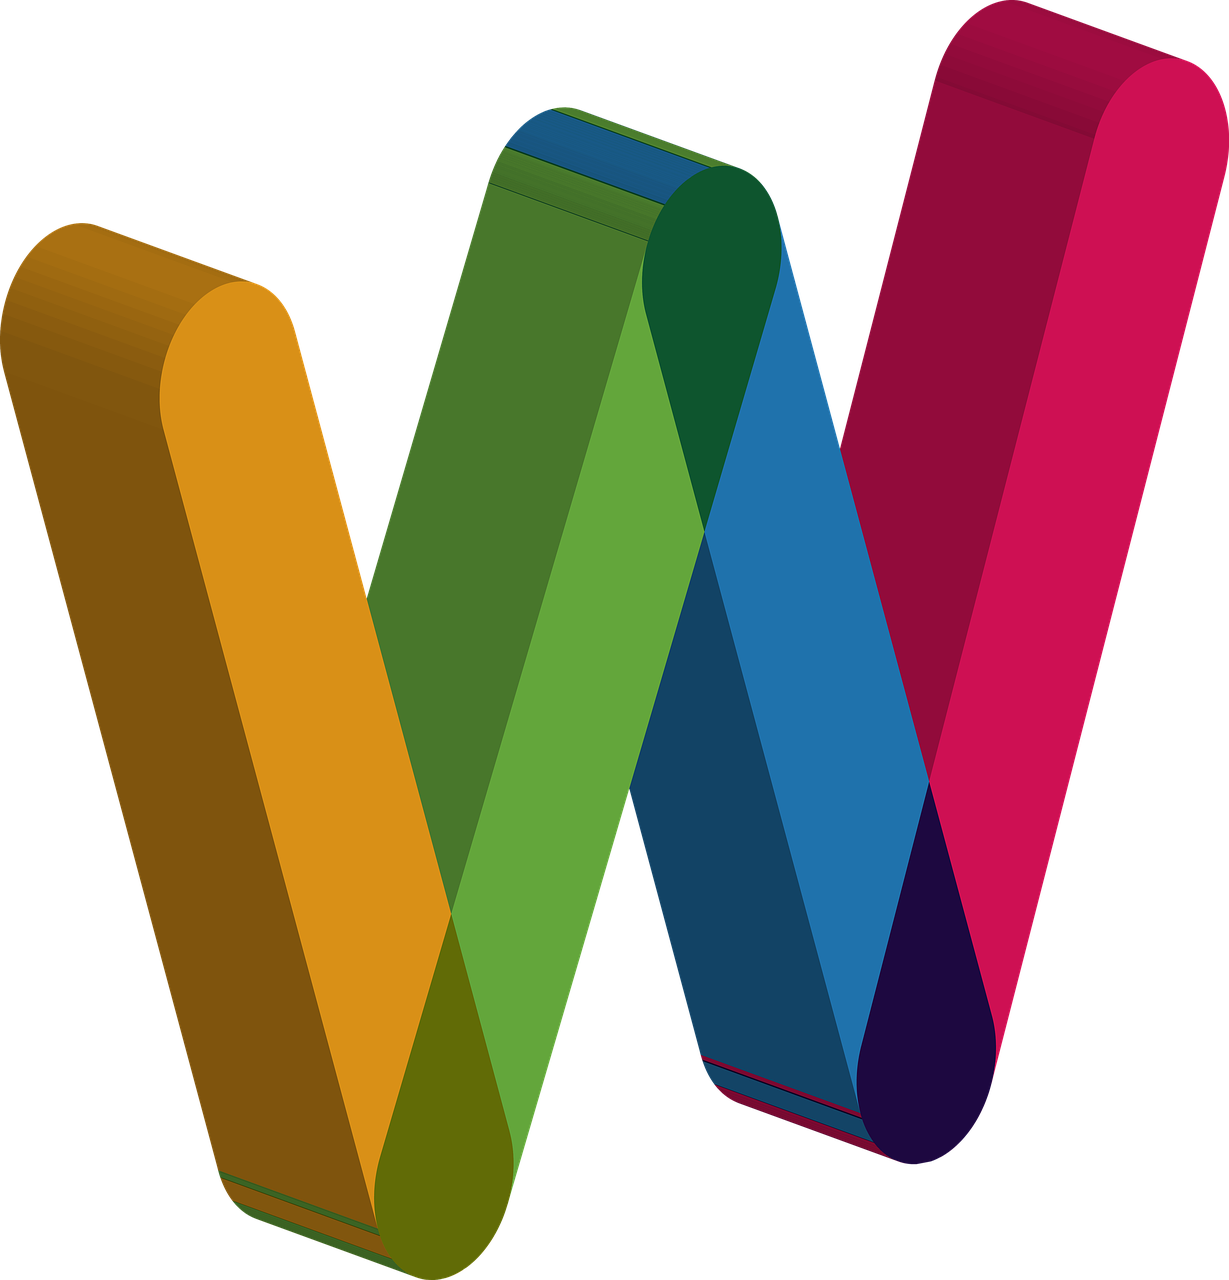 a colorful w logo on a black background, letterism, wide ribbons, wikihow illustration, award-winnig photo, worksafe. illustration